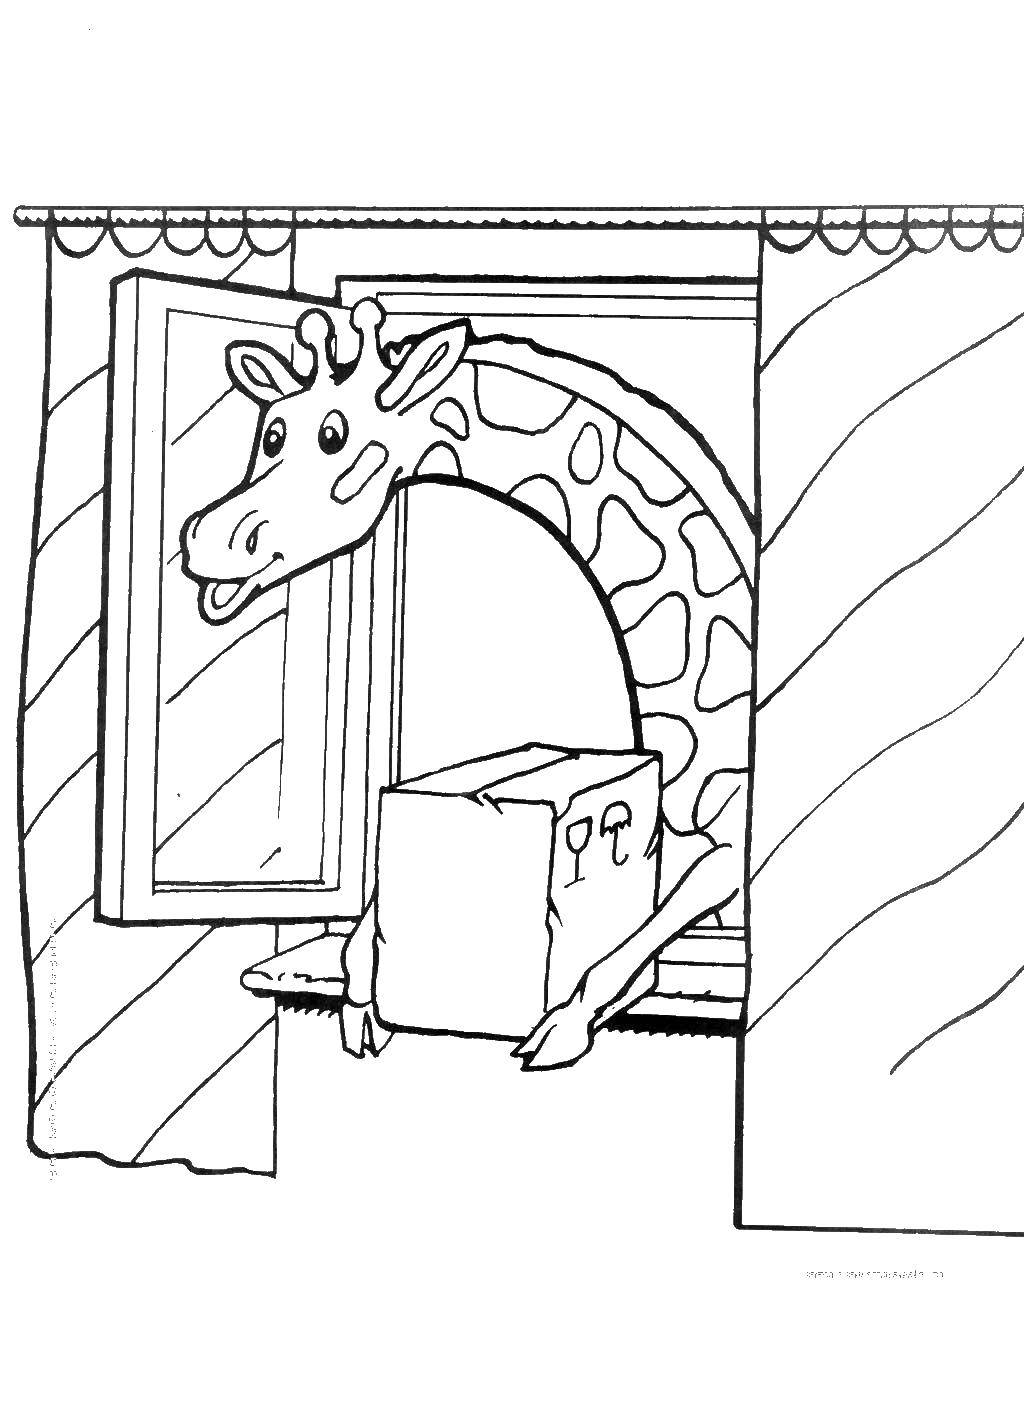 Coloring Giraffe in the window. Category Animals. Tags:  animals, cartoons, giraffe.